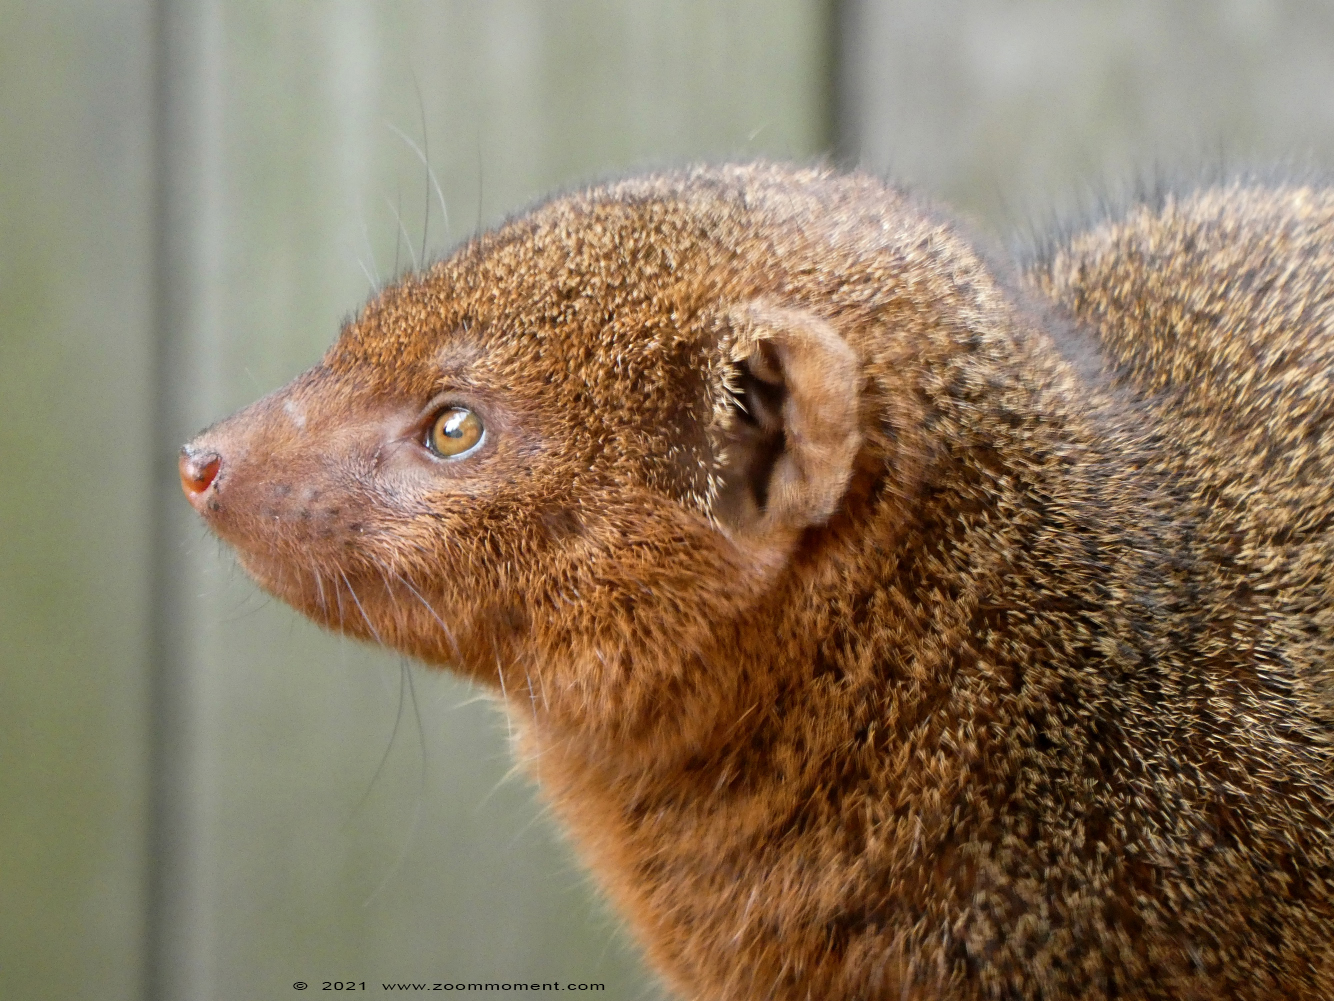 dwergmangoest ( Helogale parvula ) common dwarf mongoose
Trefwoorden: Ziezoo Volkel Nederland dwergmangoest Helogale parvula dwarf mongoose